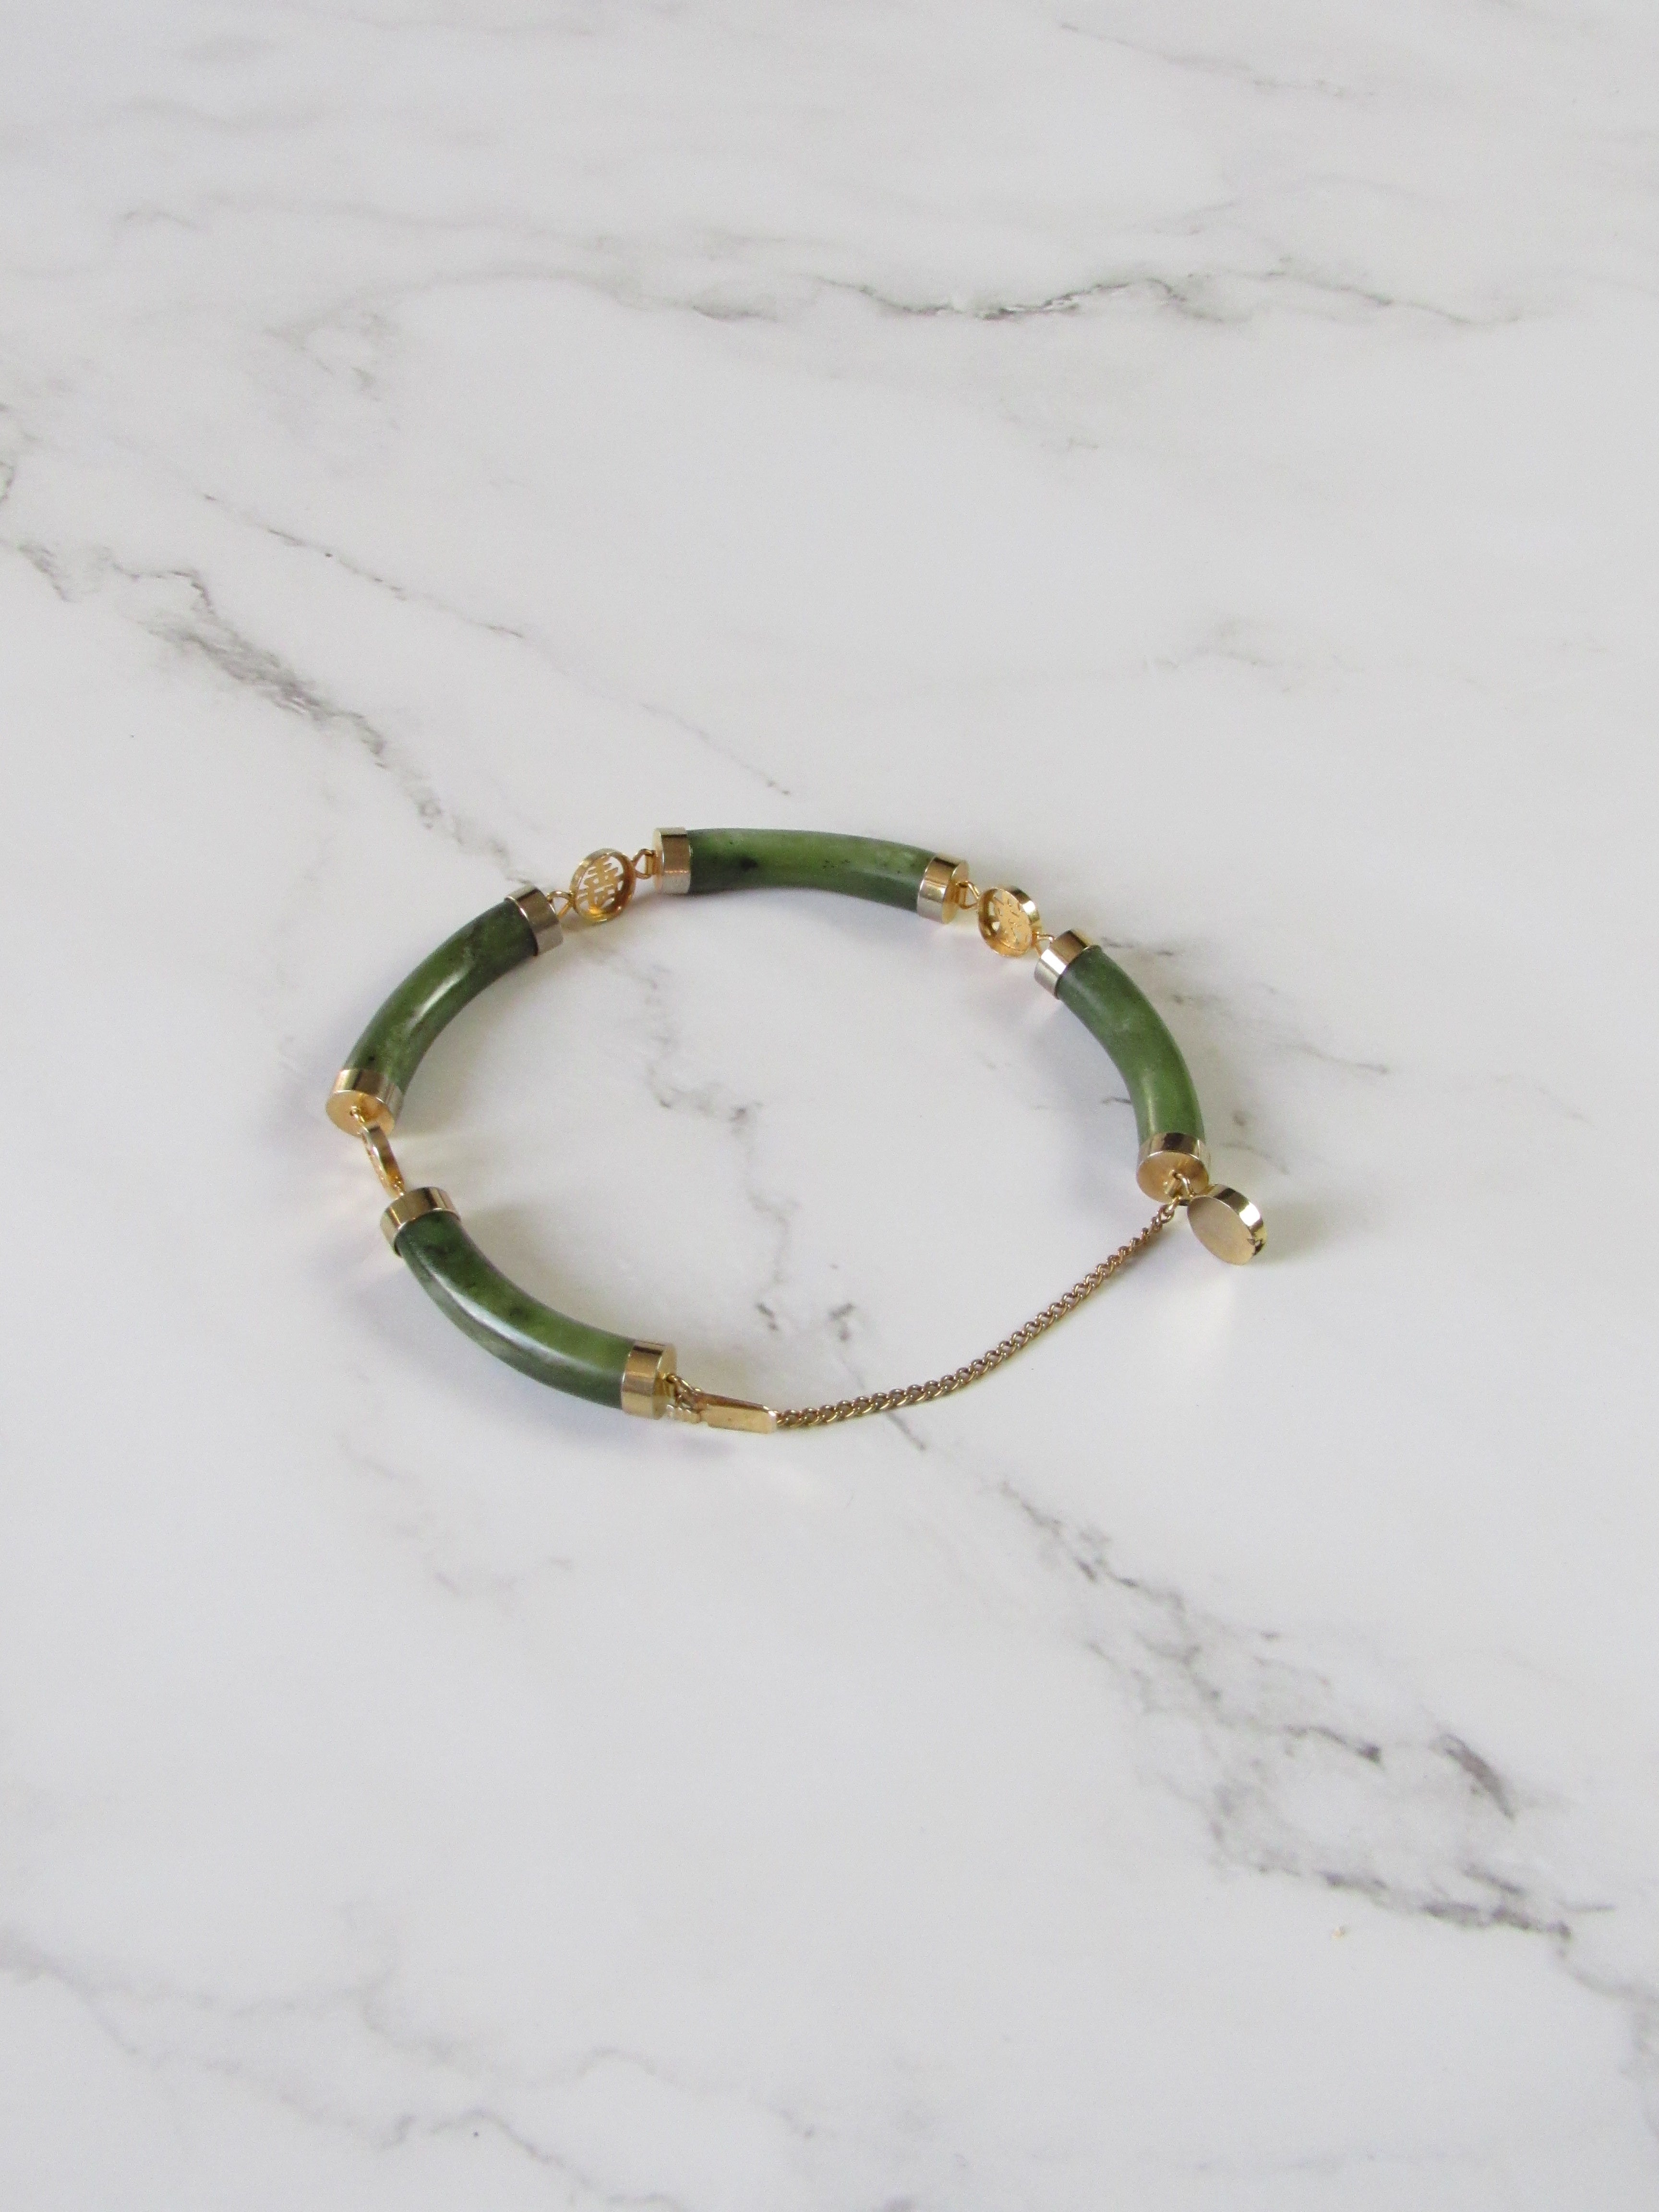 Chinese Blessing Word Green Jade Linked Bracelet